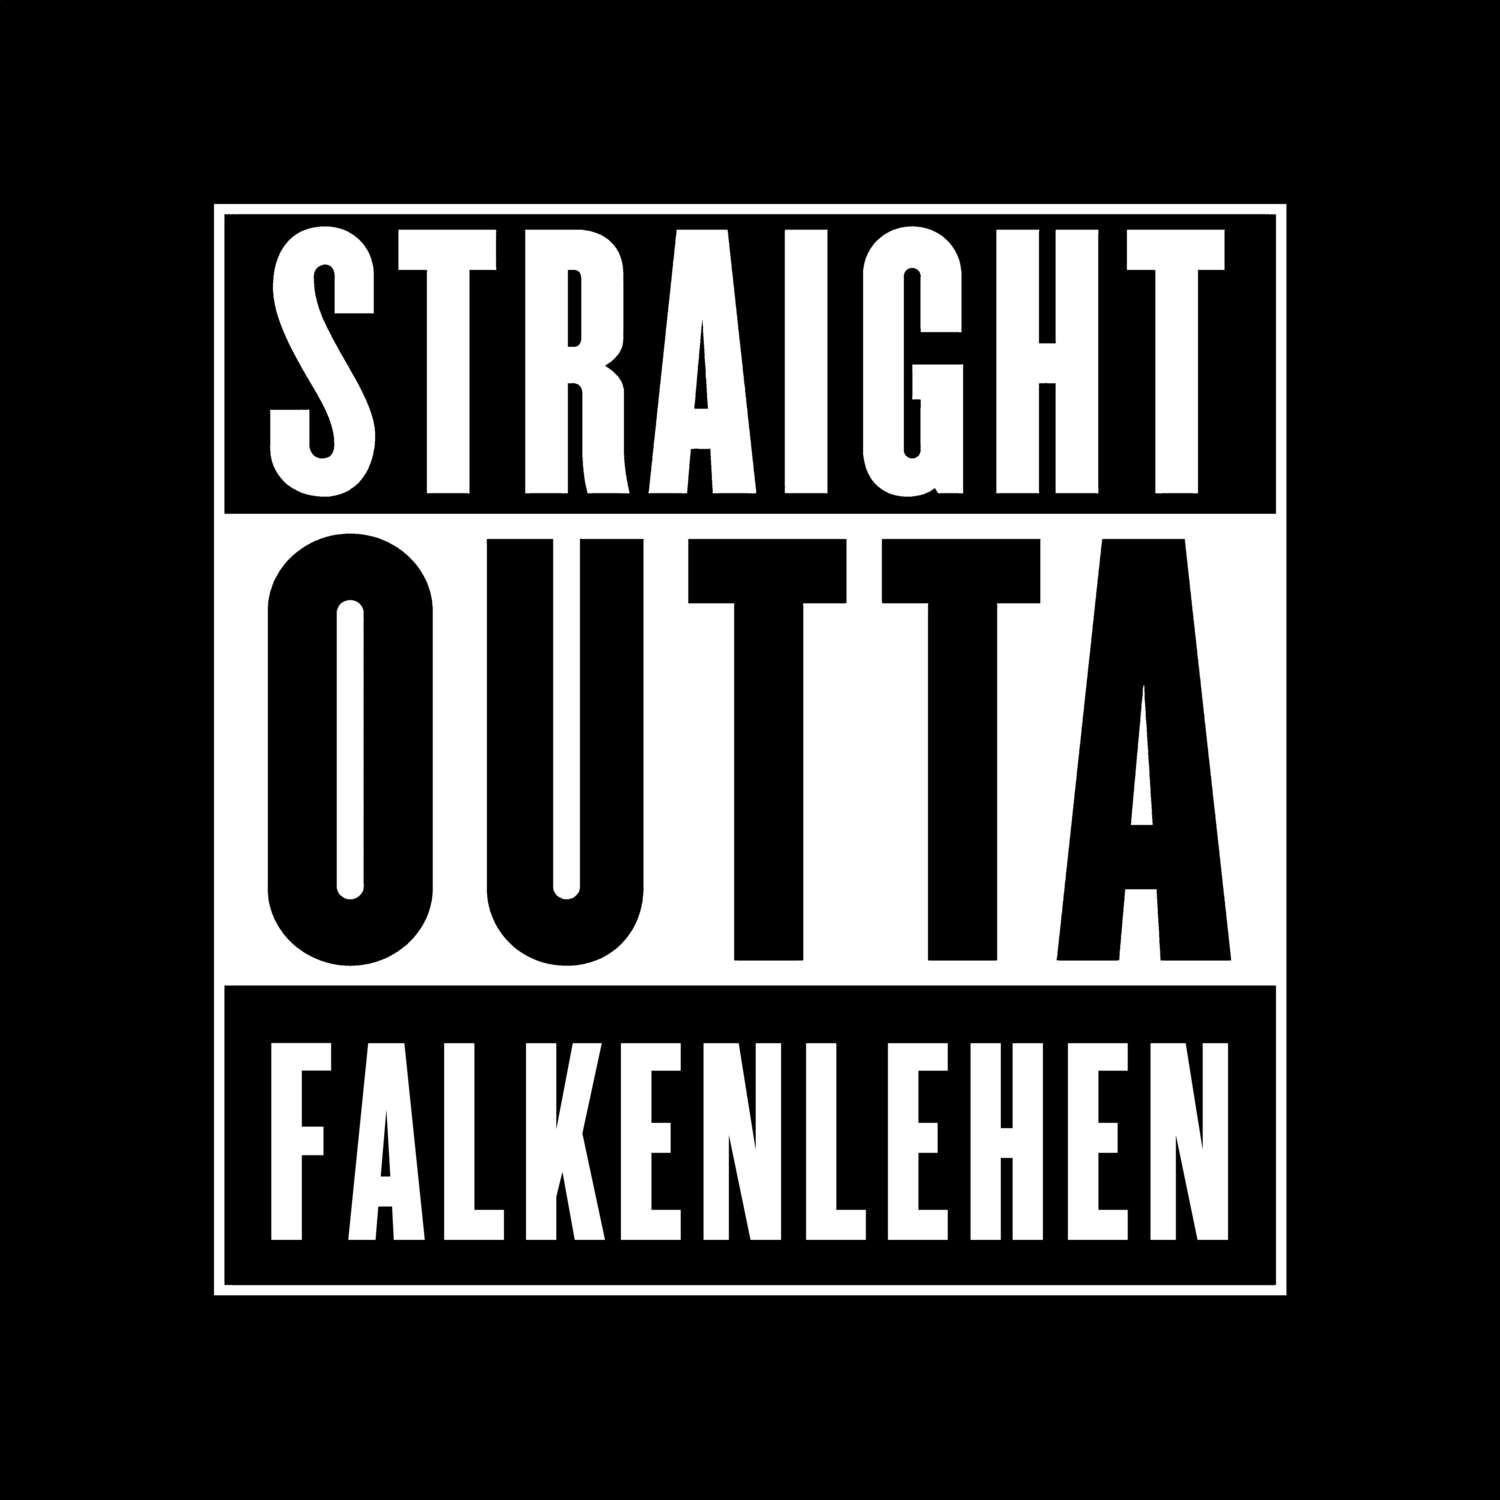 Falkenlehen T-Shirt »Straight Outta«